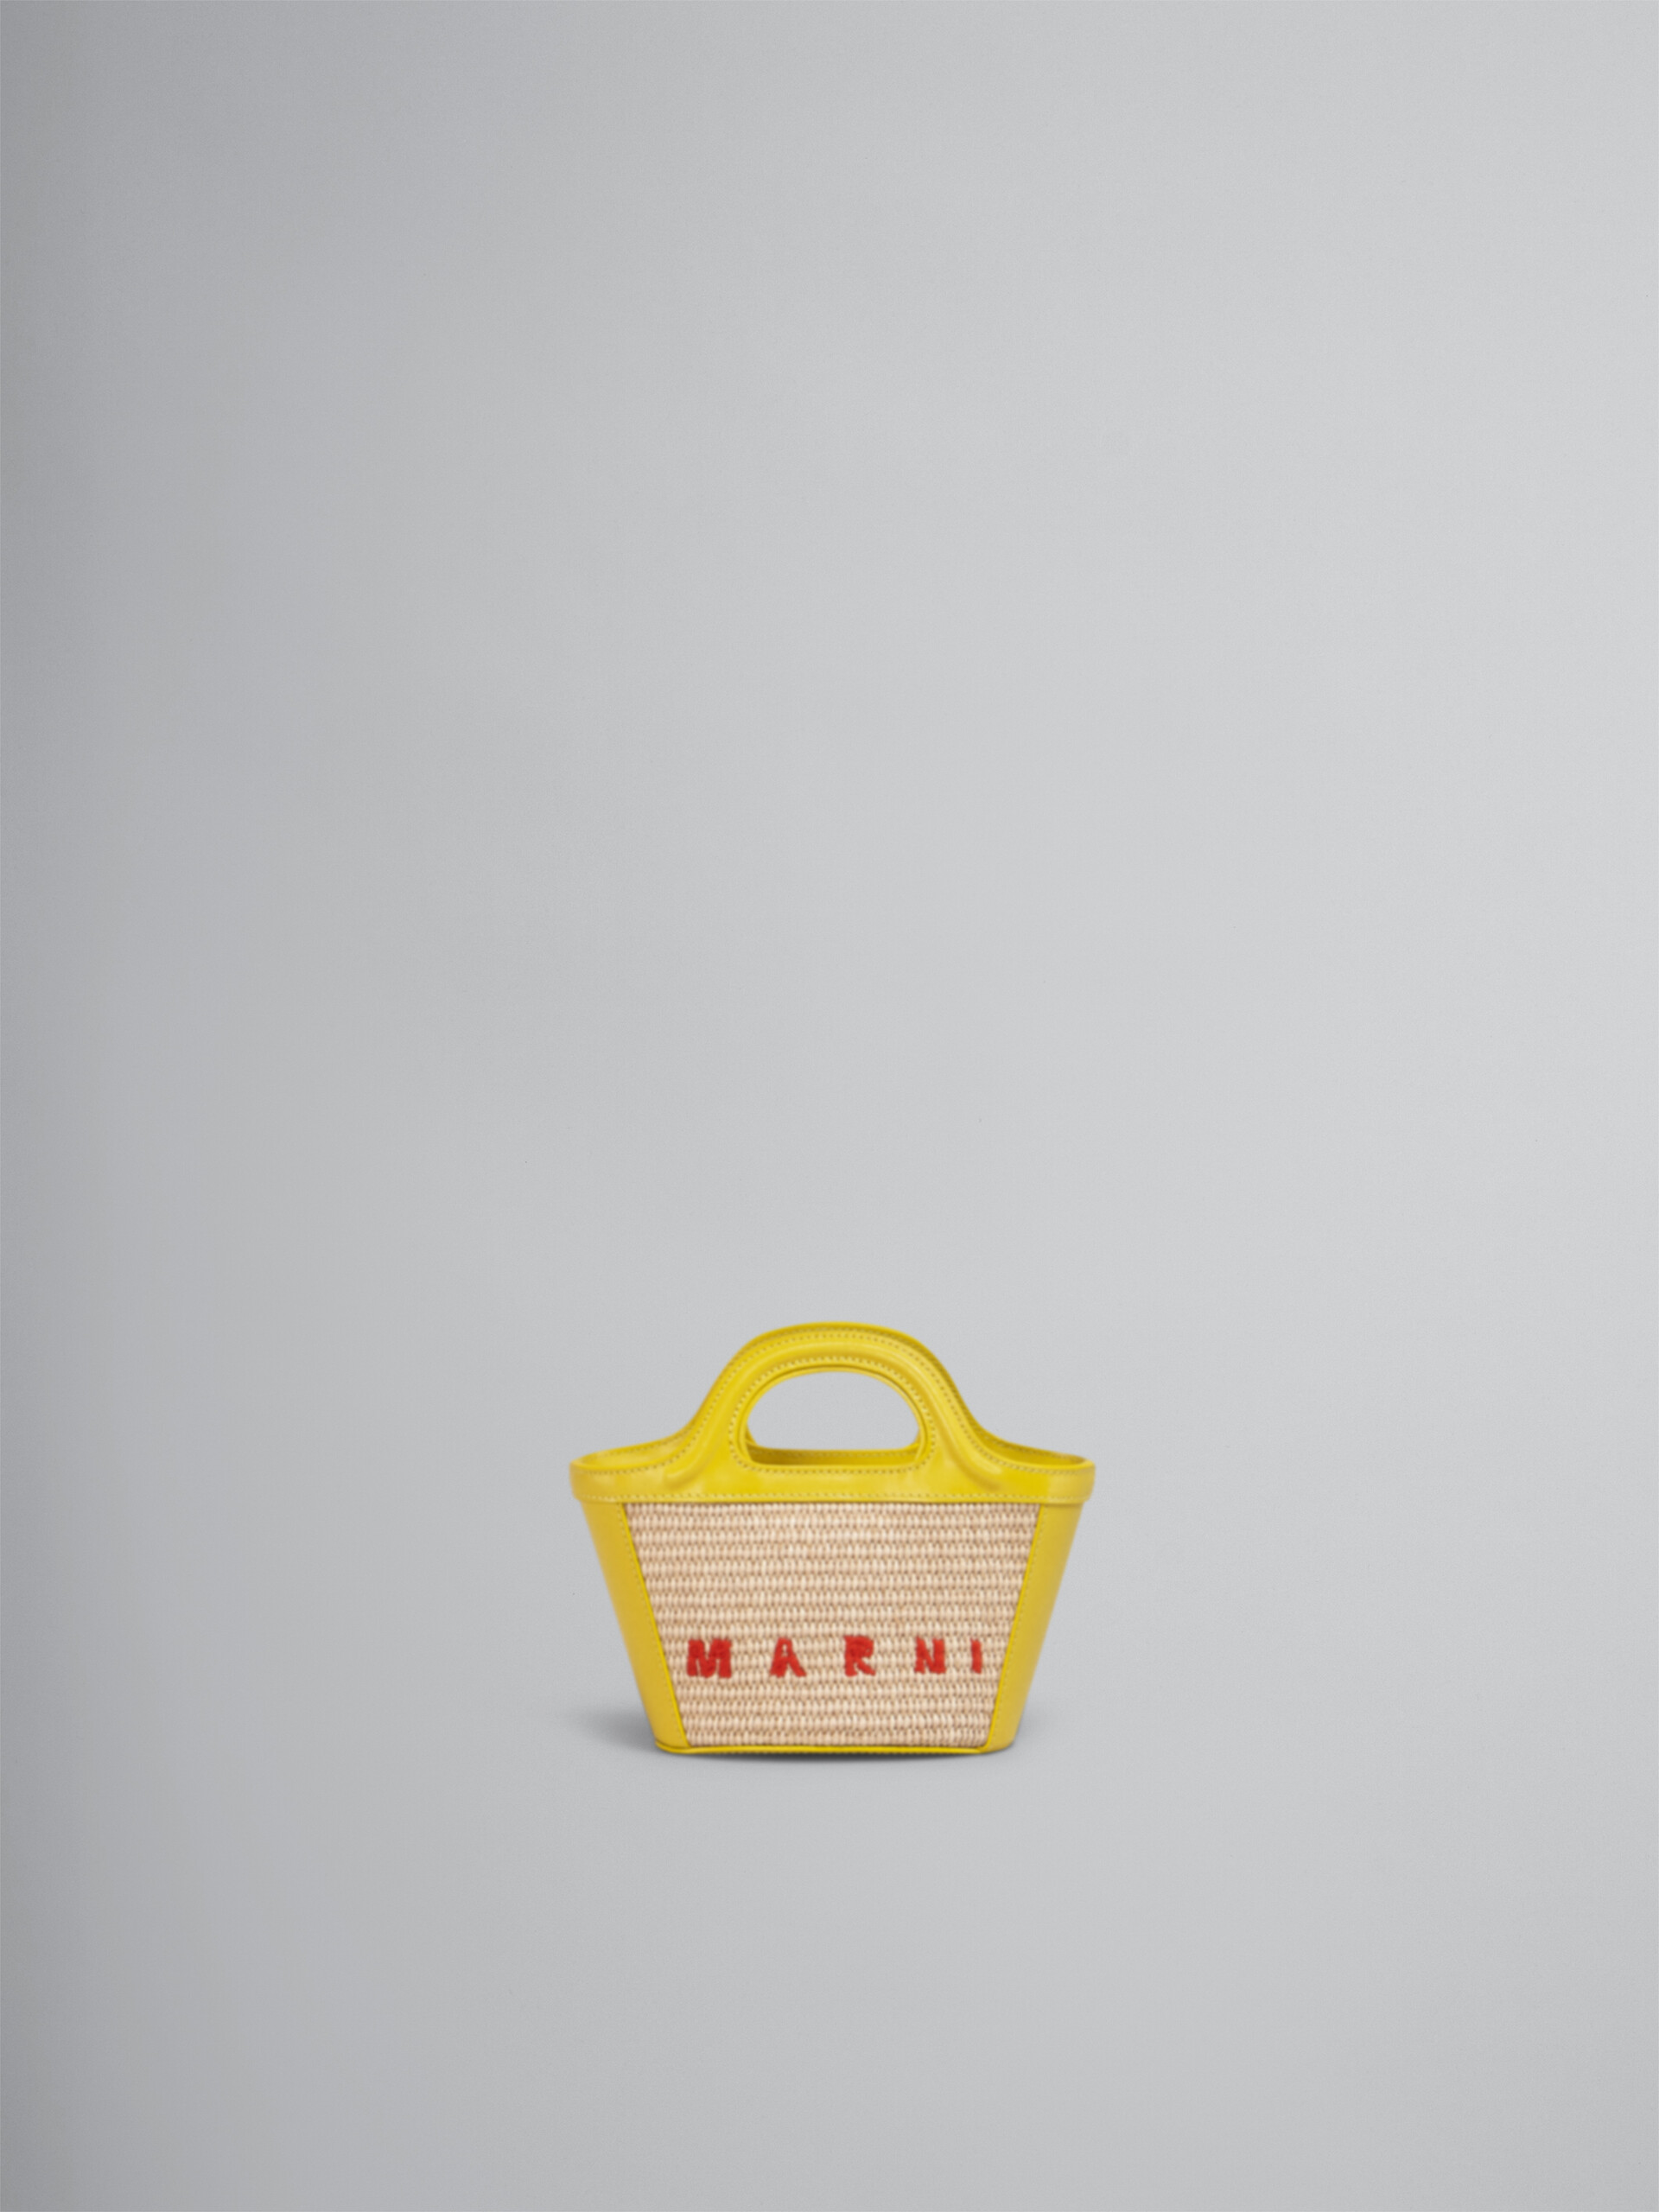 TROPICALIA micro bag in yellow leather and raffia - Handbag - Image 1